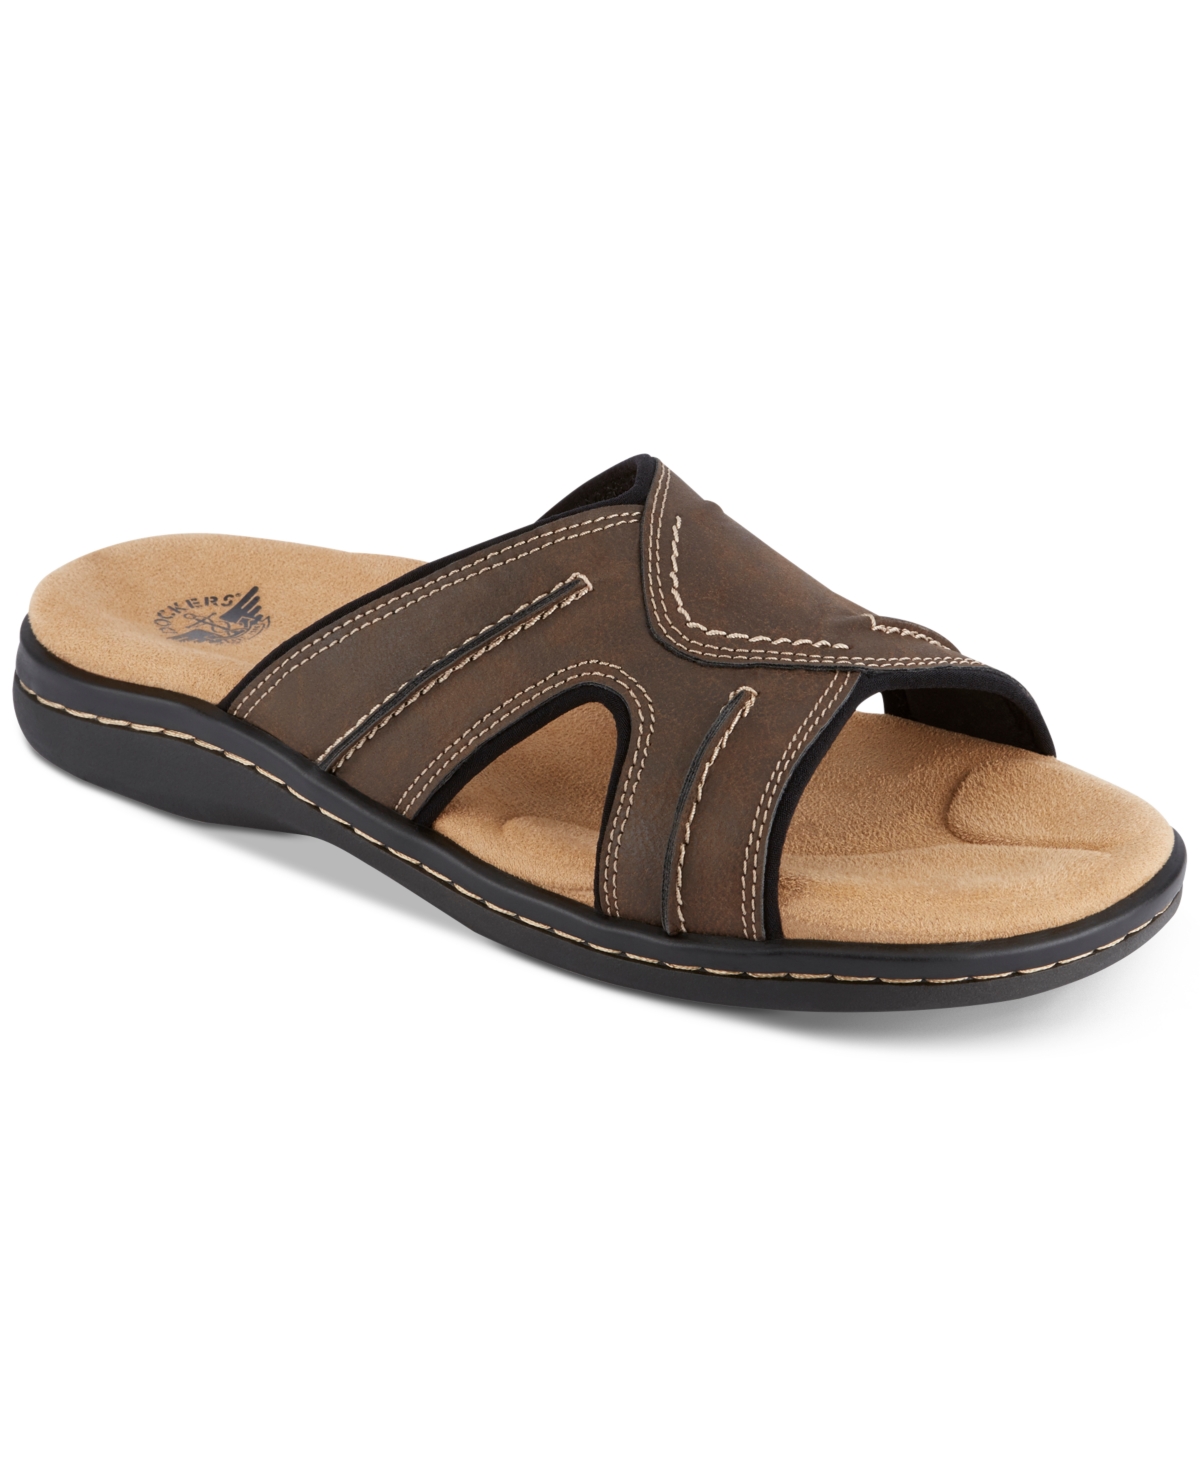 Men's Sunland Leather Sandals - Rust